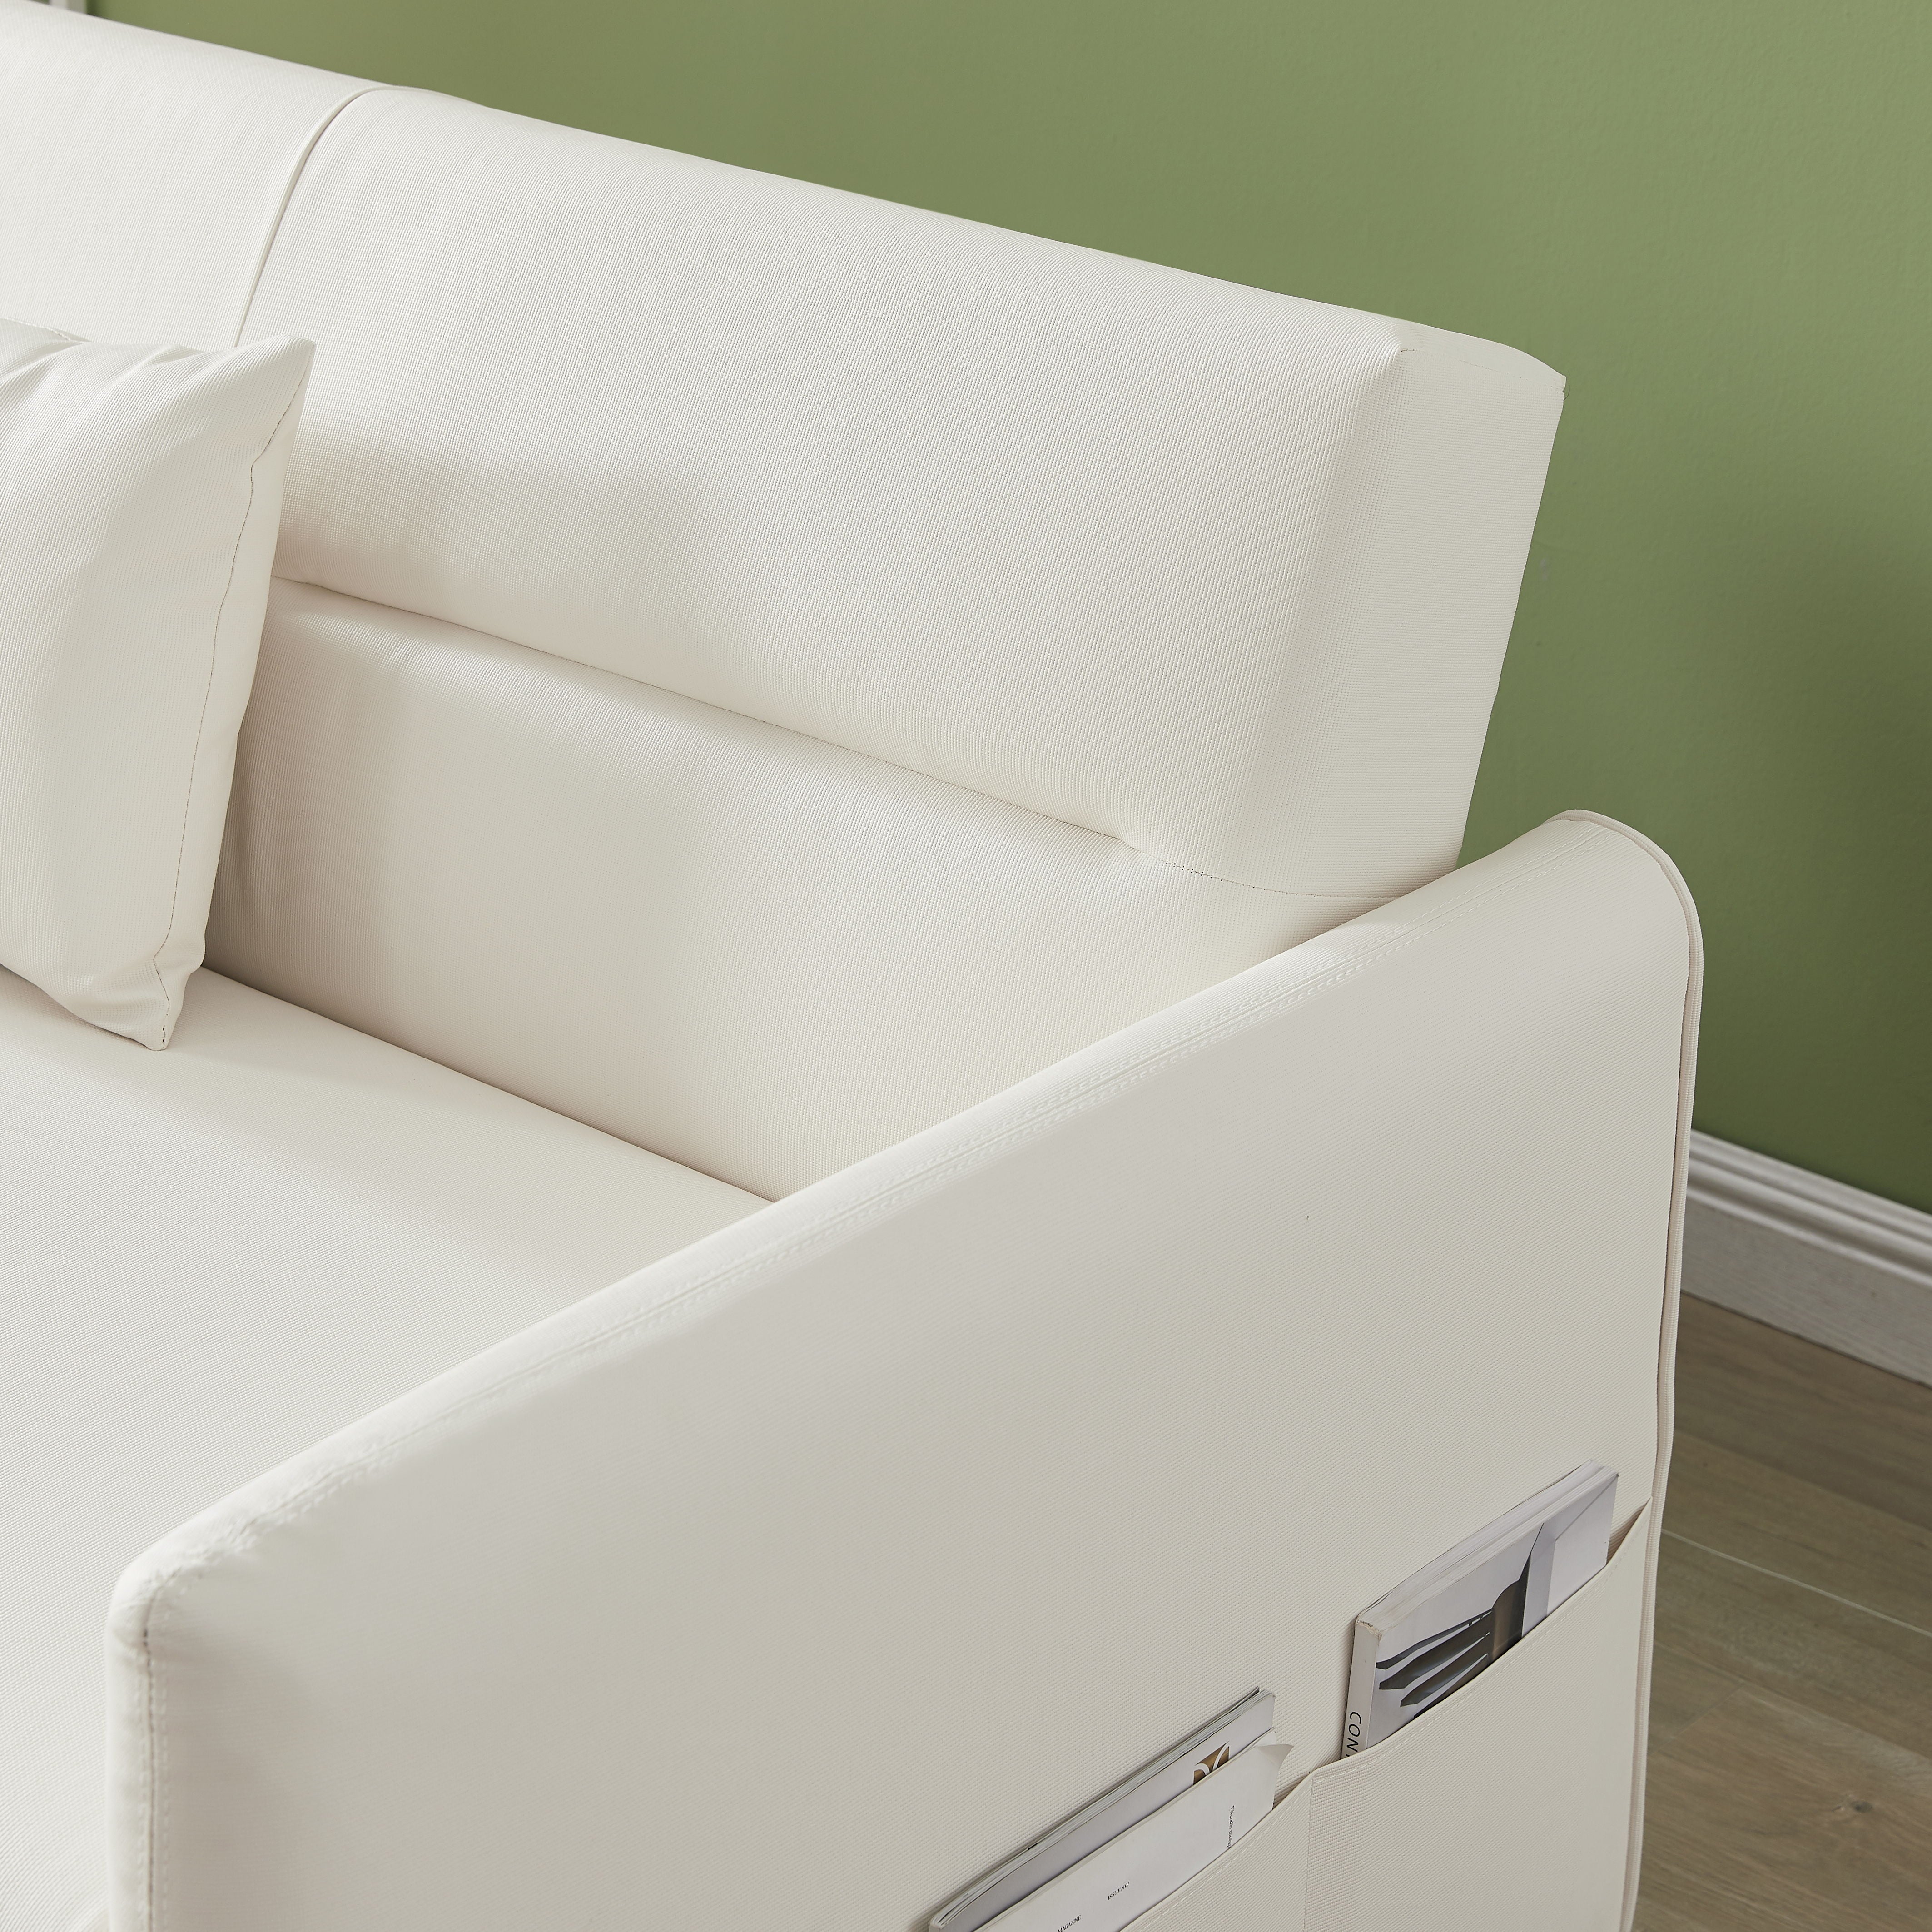 2033 White Cloth Grain Leather (PU) Leisure Two-Seat Sofa